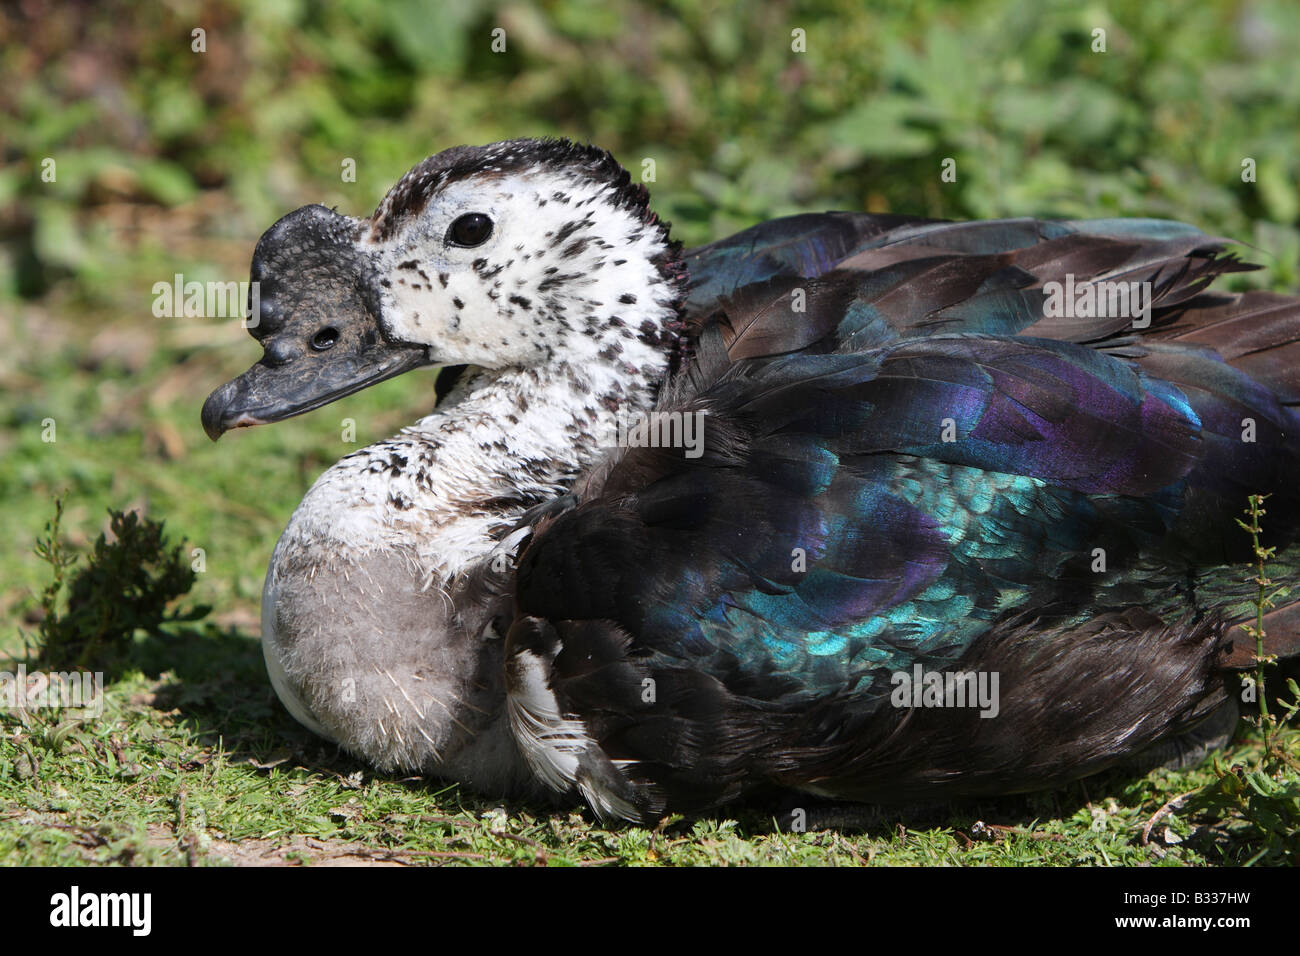 South American Comb Duck, Sarkidiornis melanotos carunculatus Stock Photo